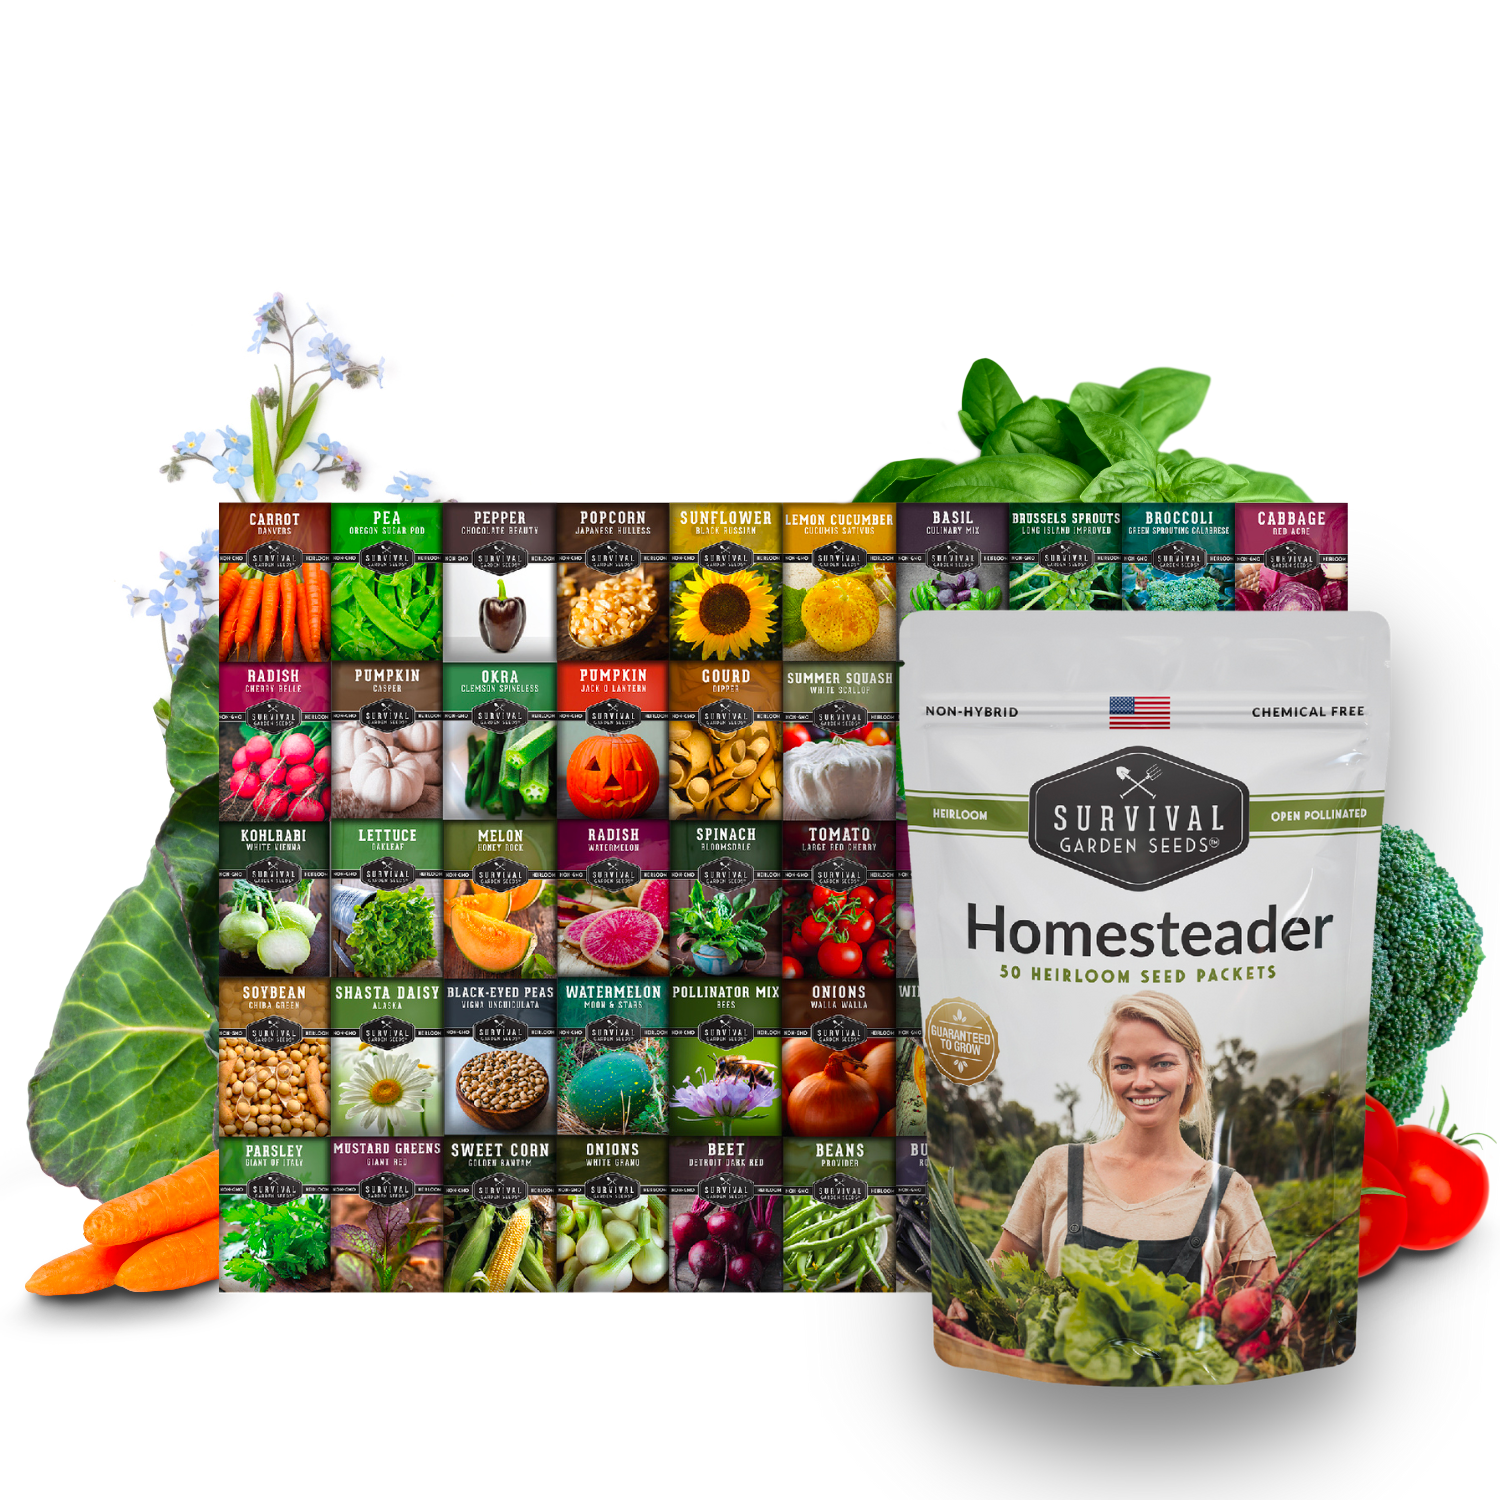 Larger pack of survival seeds - Homesteader collection 50 packs of heirloom seeds